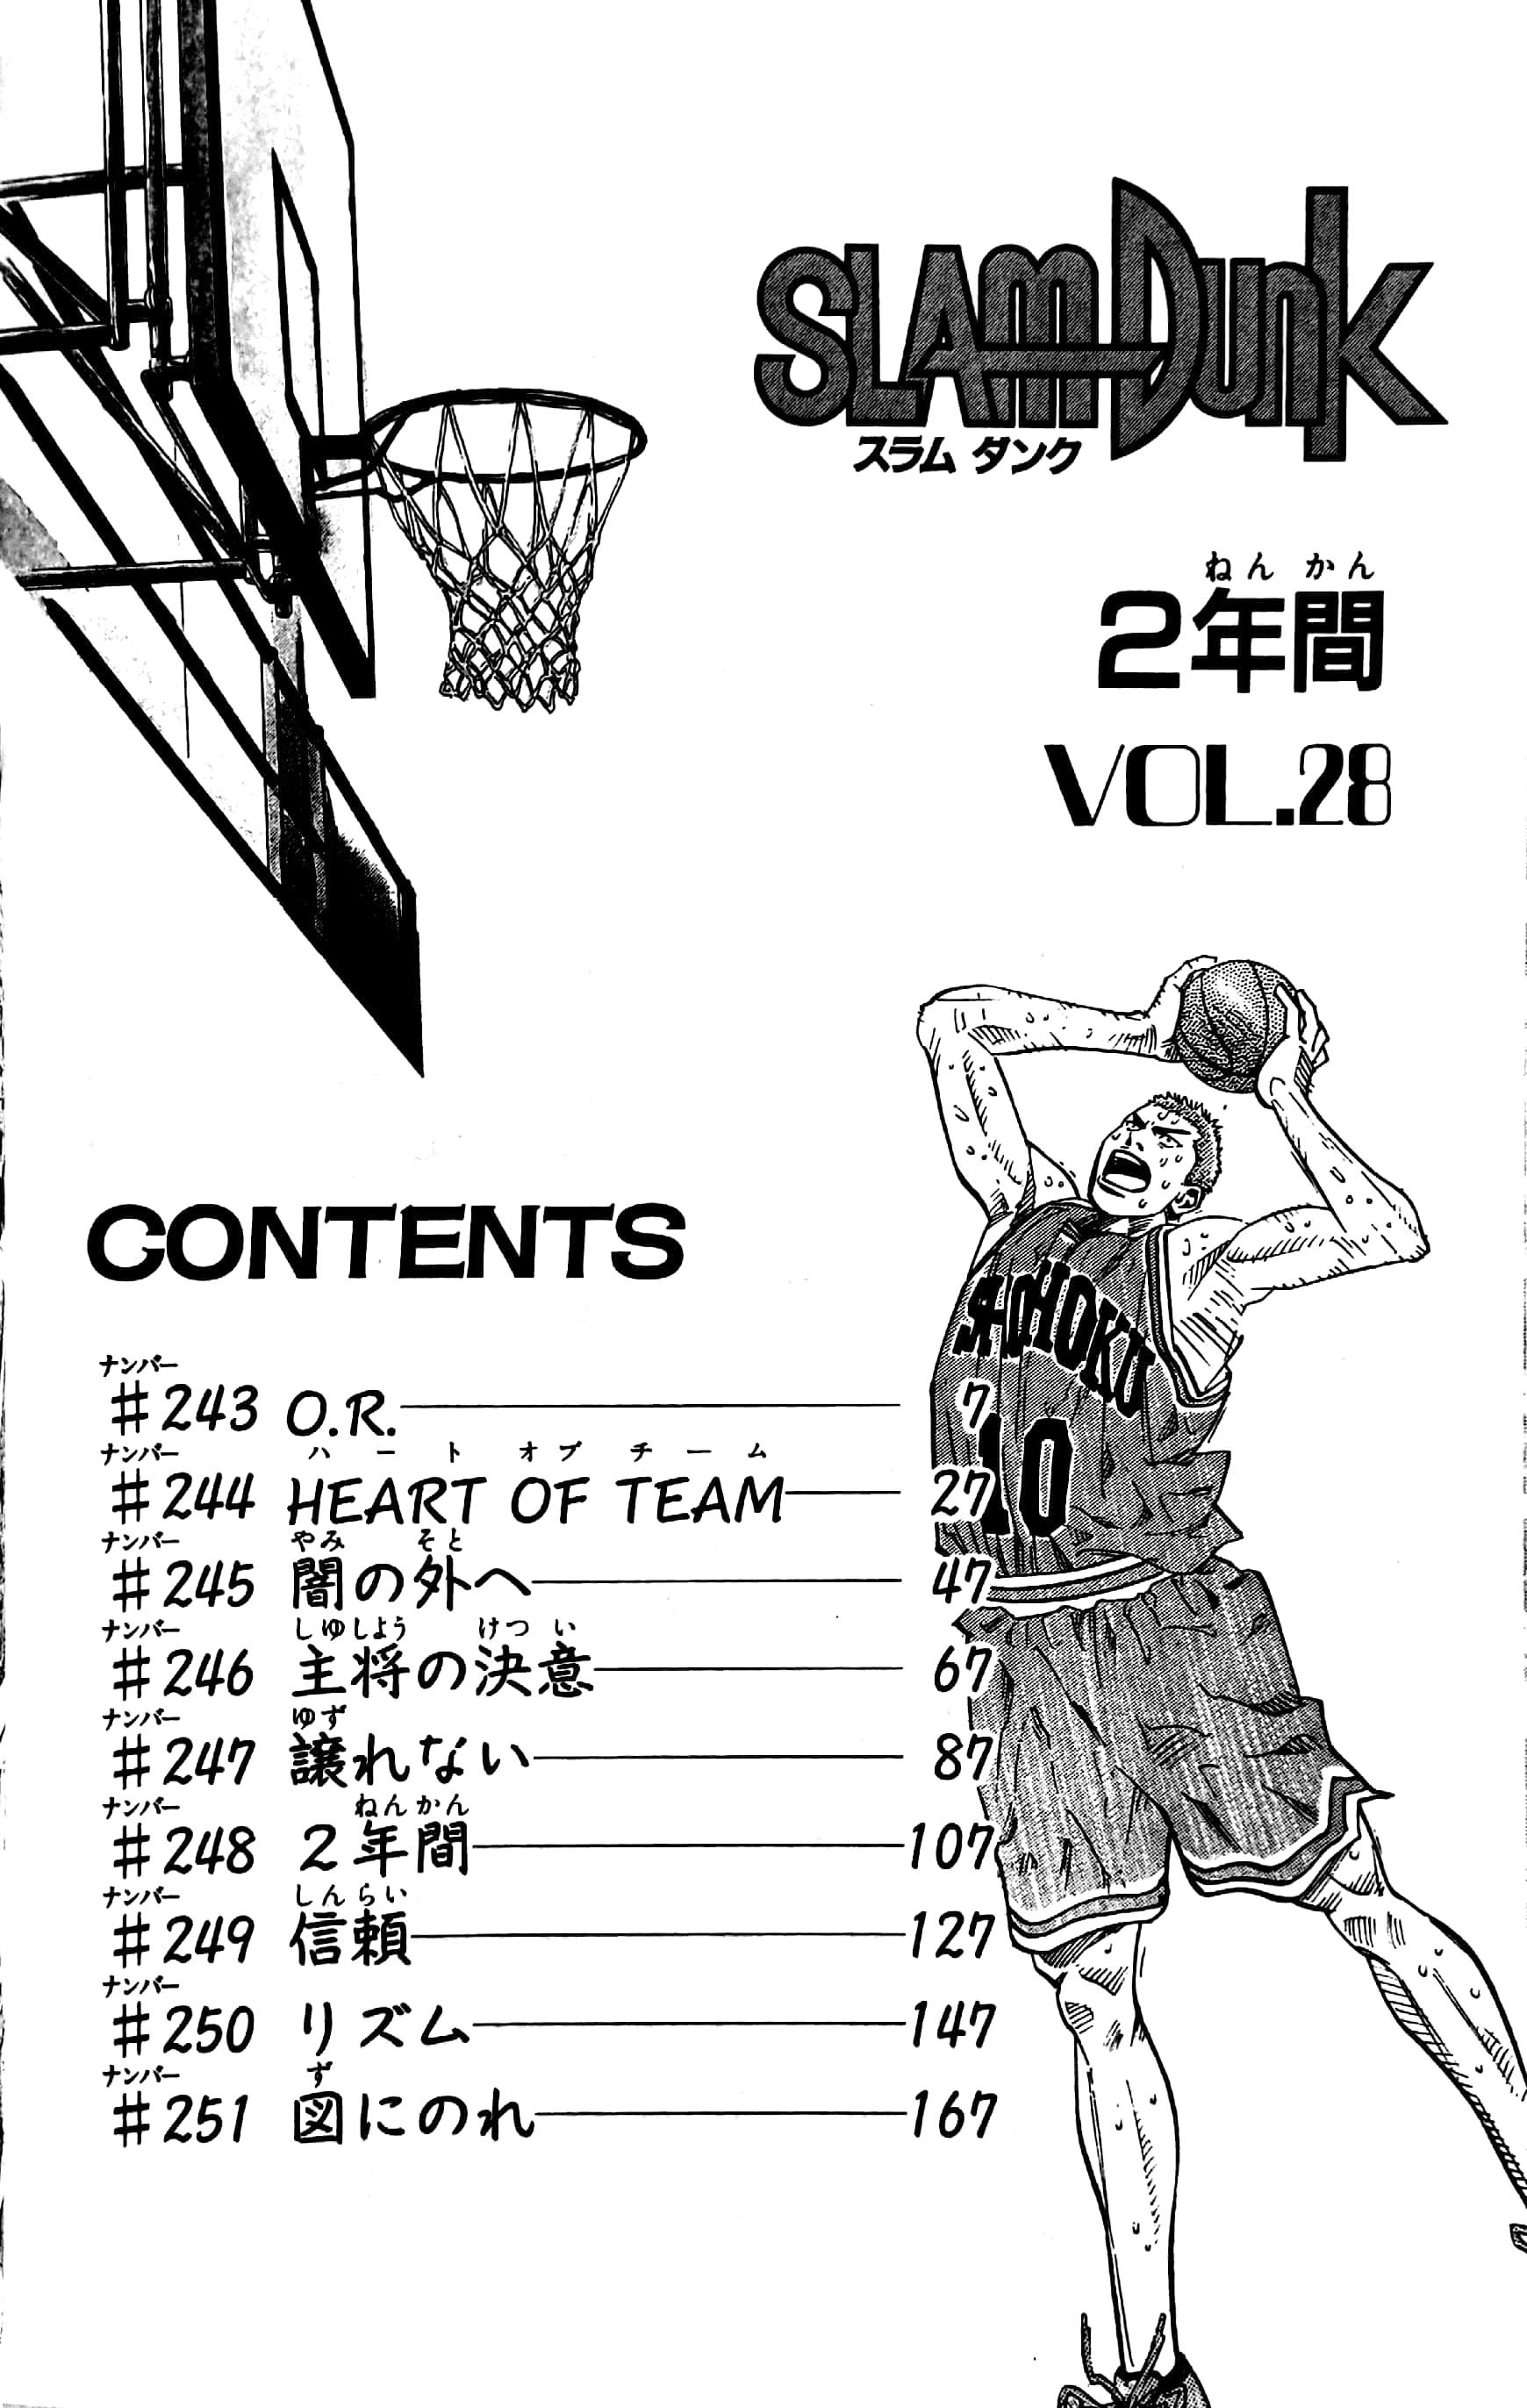 Slam Dunk 28 (Japanese Edition)